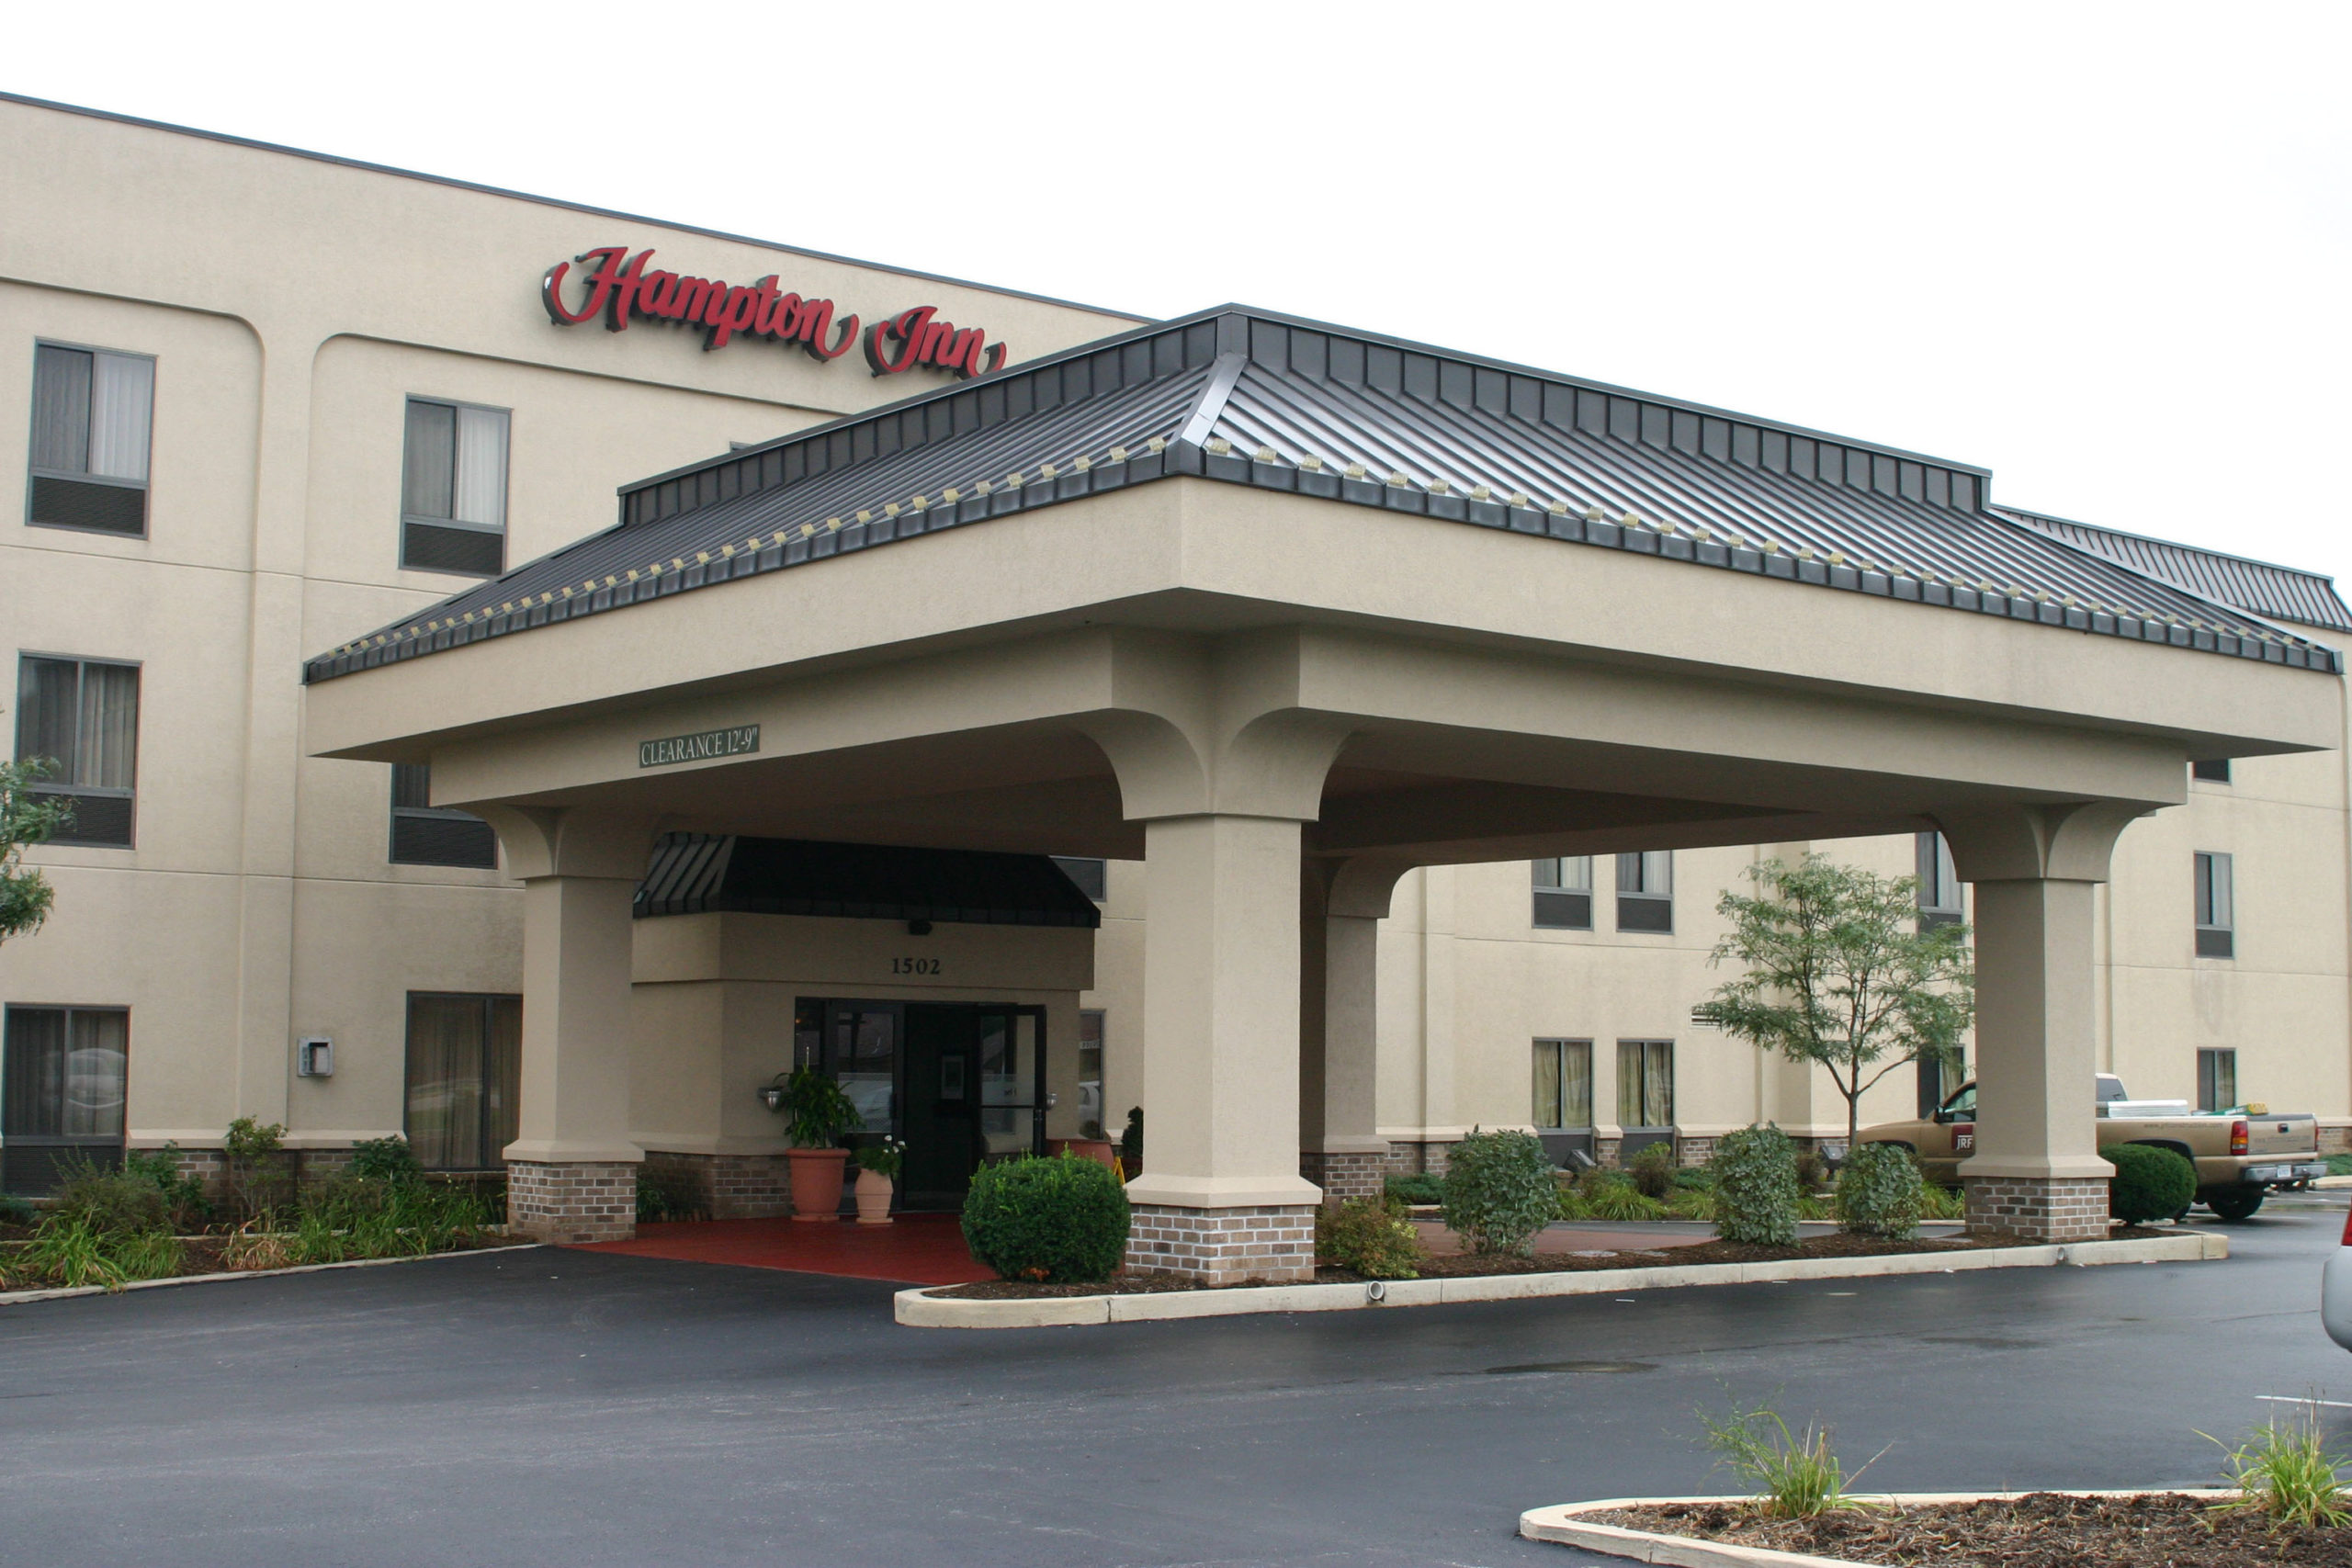 Hampton Inn, Lodging, Hotels, Marion Indiana hotels